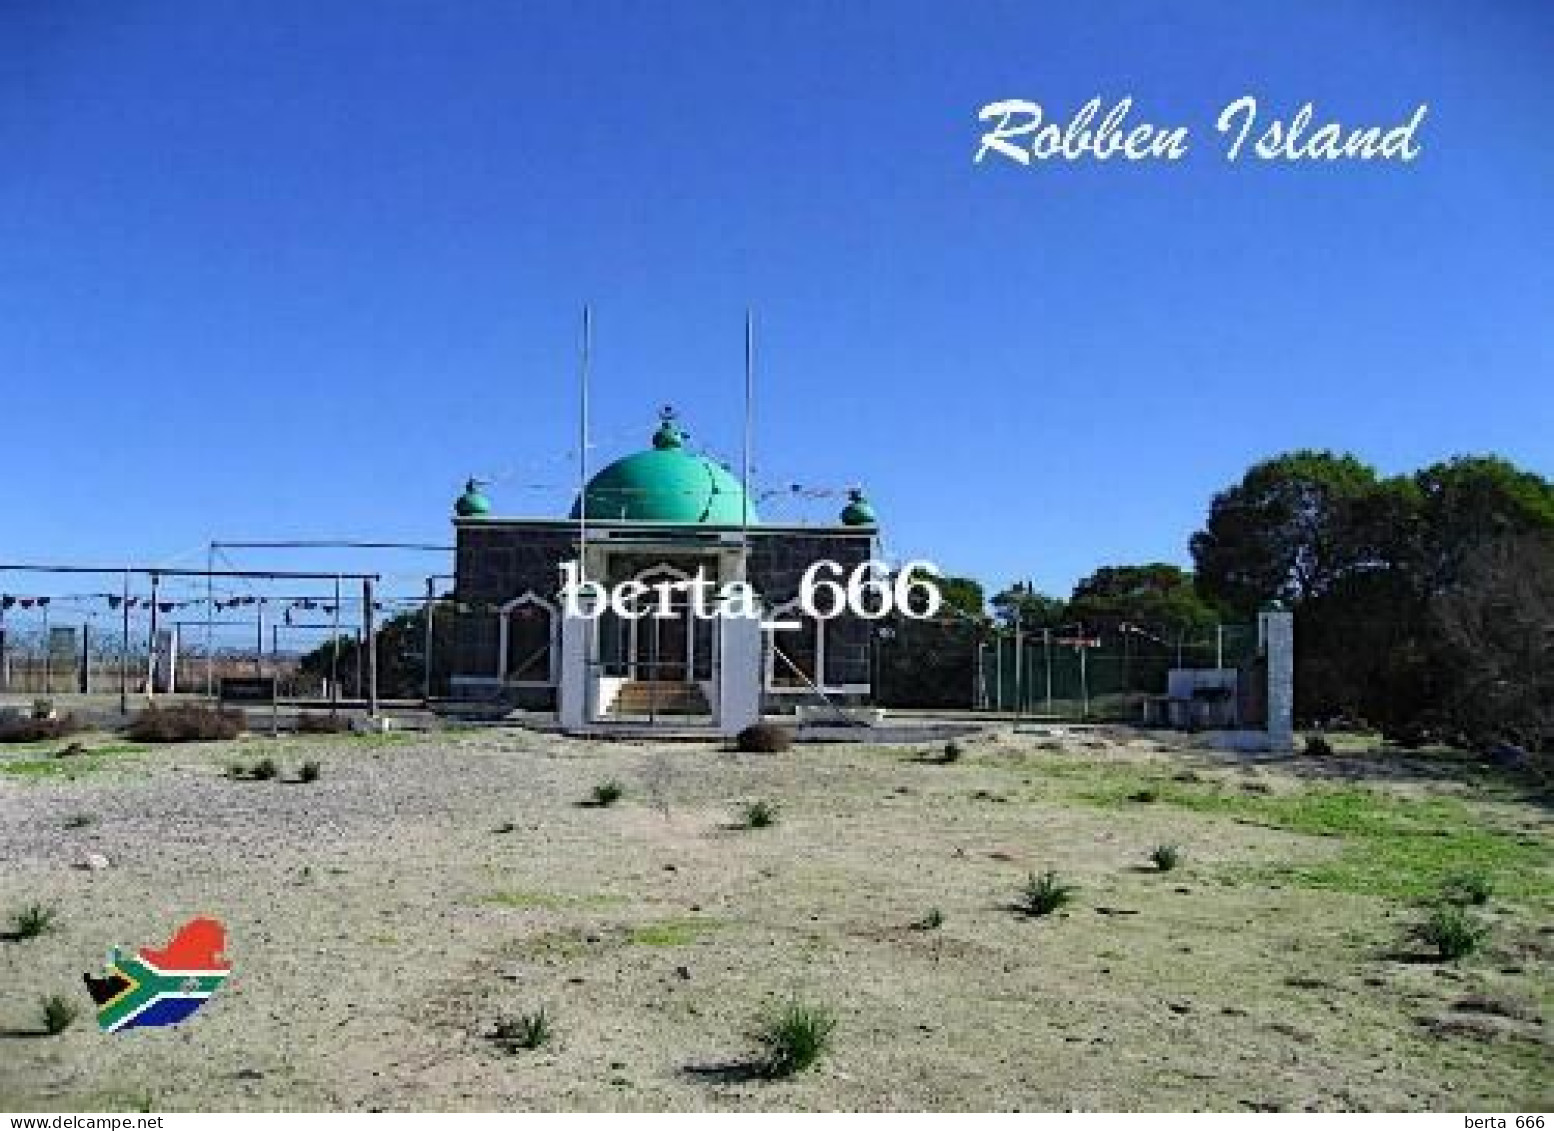 Robben Island UNESCO Moturu Kramat Muslim Shrine South Africa New Postcard - South Africa